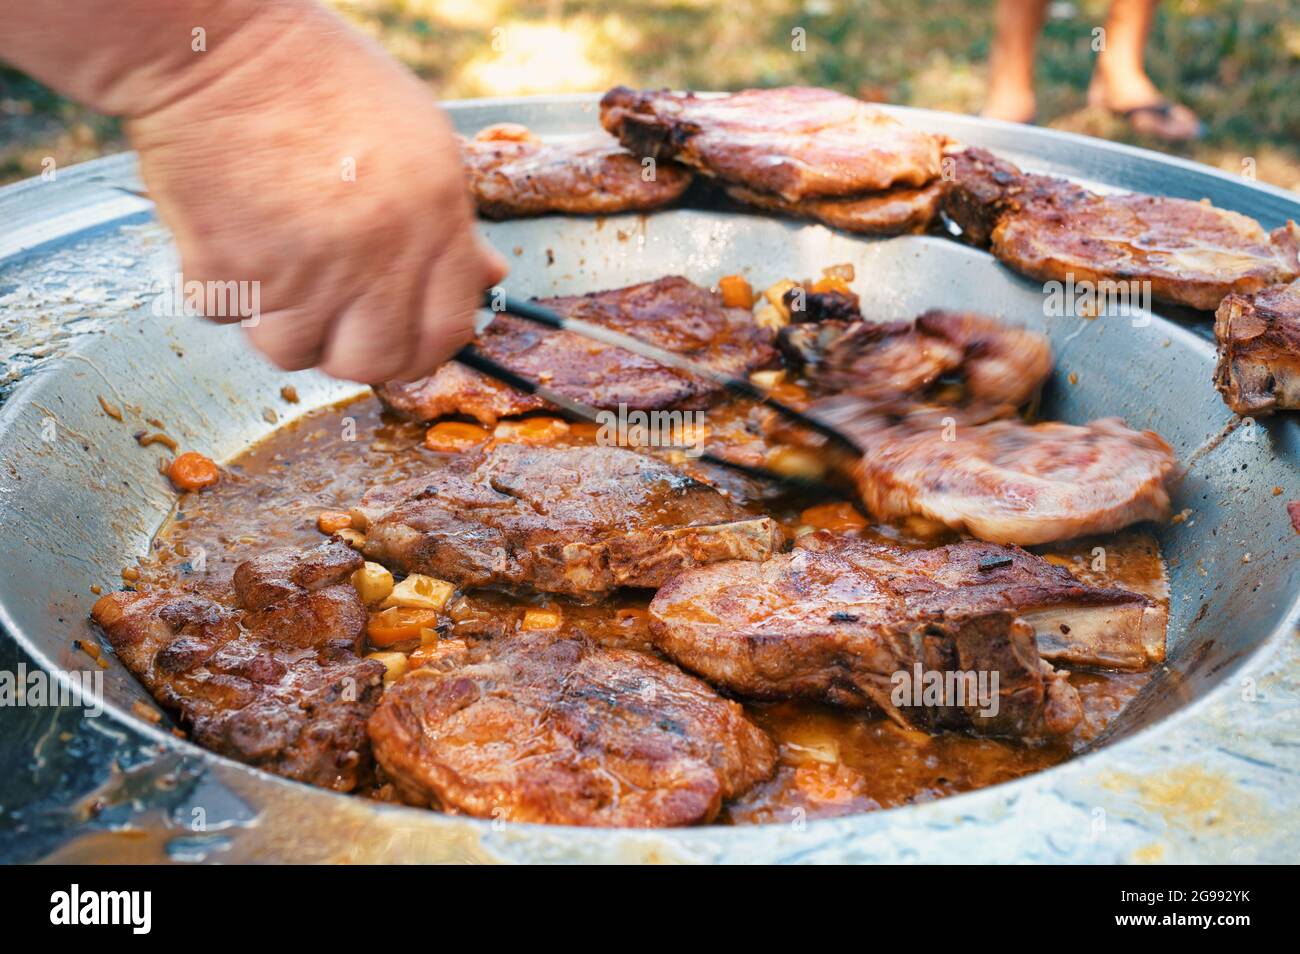 Vue en grand angle de la viande de porc sur la plaque du barbecue Banque D'Images